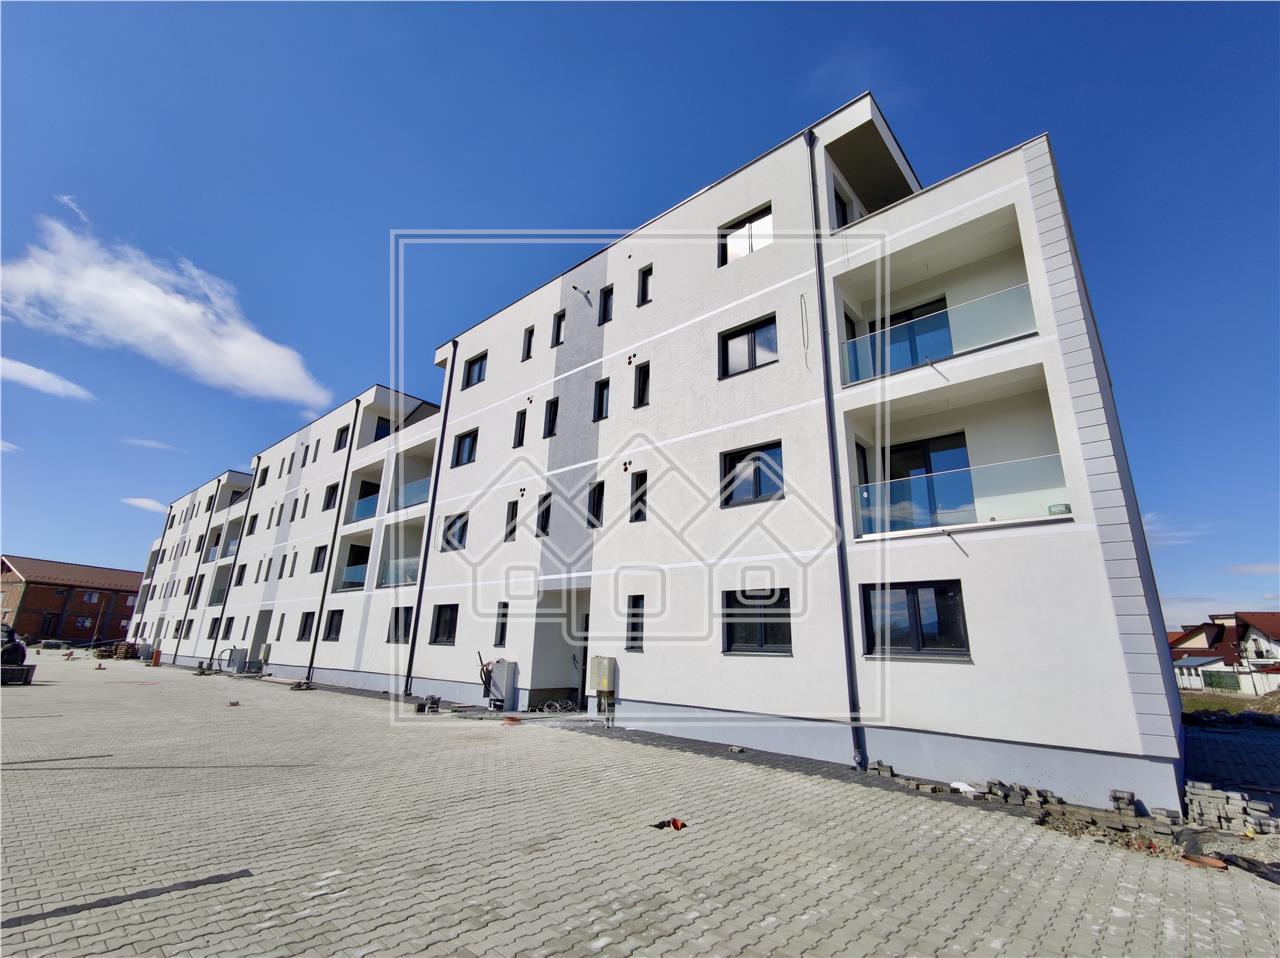 Apartment for sale in Sibiu, Selimbar - 2 rooms - floor 1 - underfloor